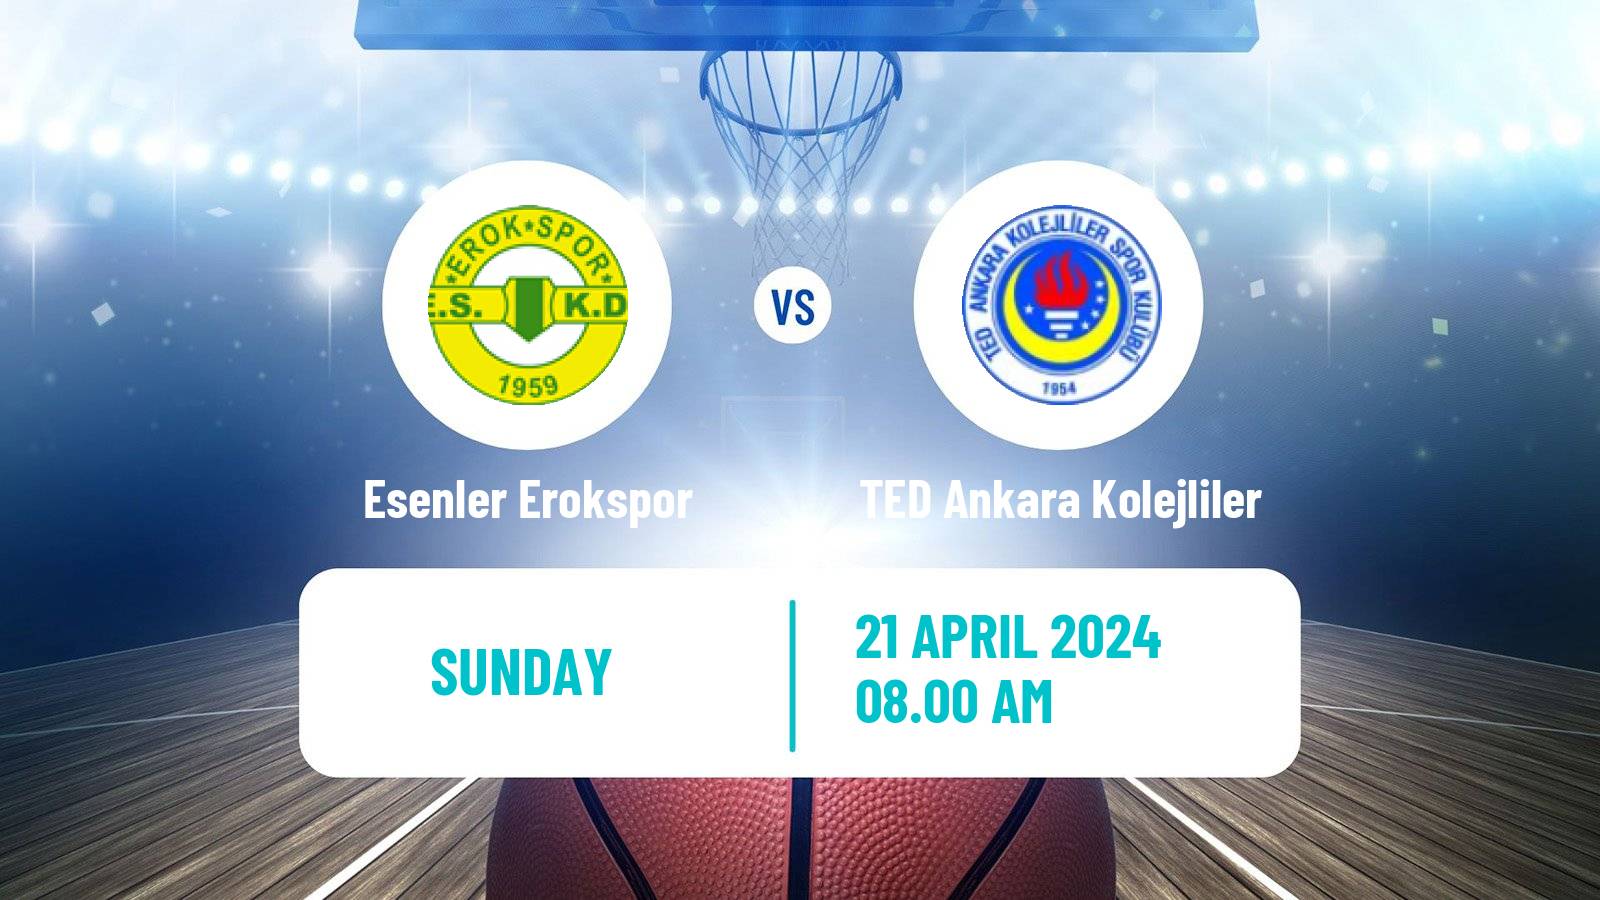 Basketball Turkish TBL Esenler Erokspor - TED Ankara Kolejliler